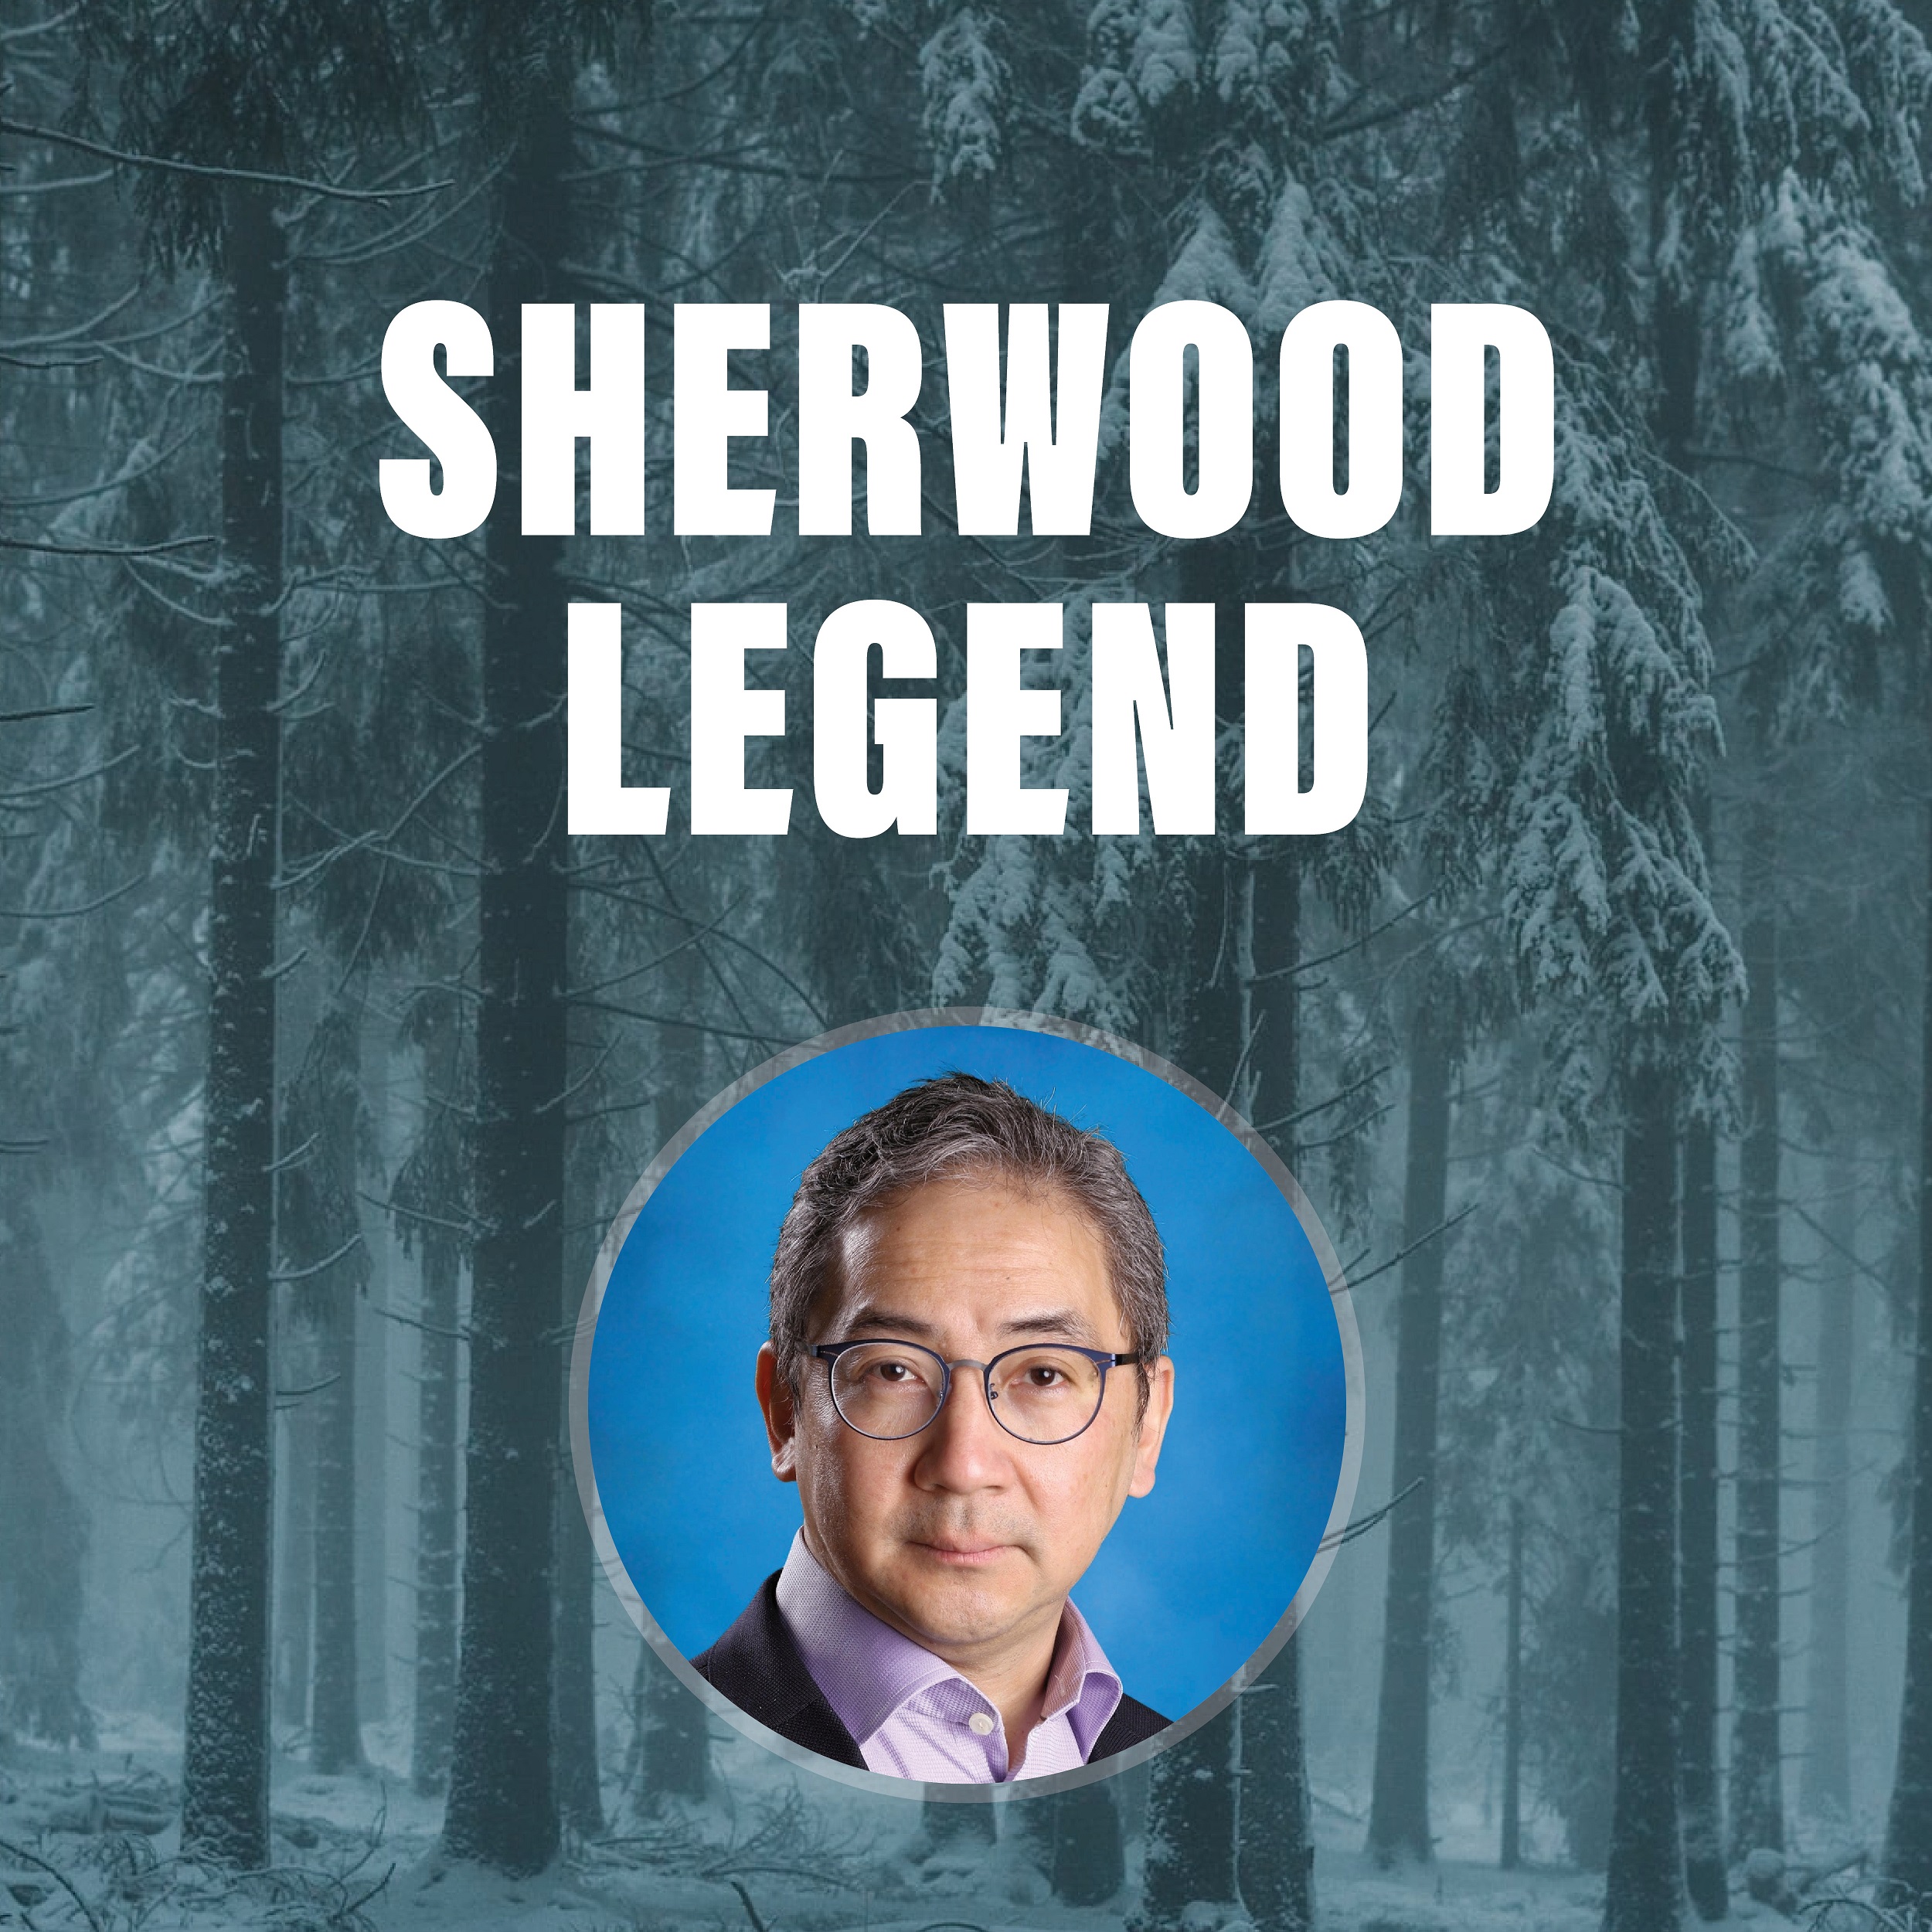 Saturday, February 25th, 2023 - Sherwood Legend